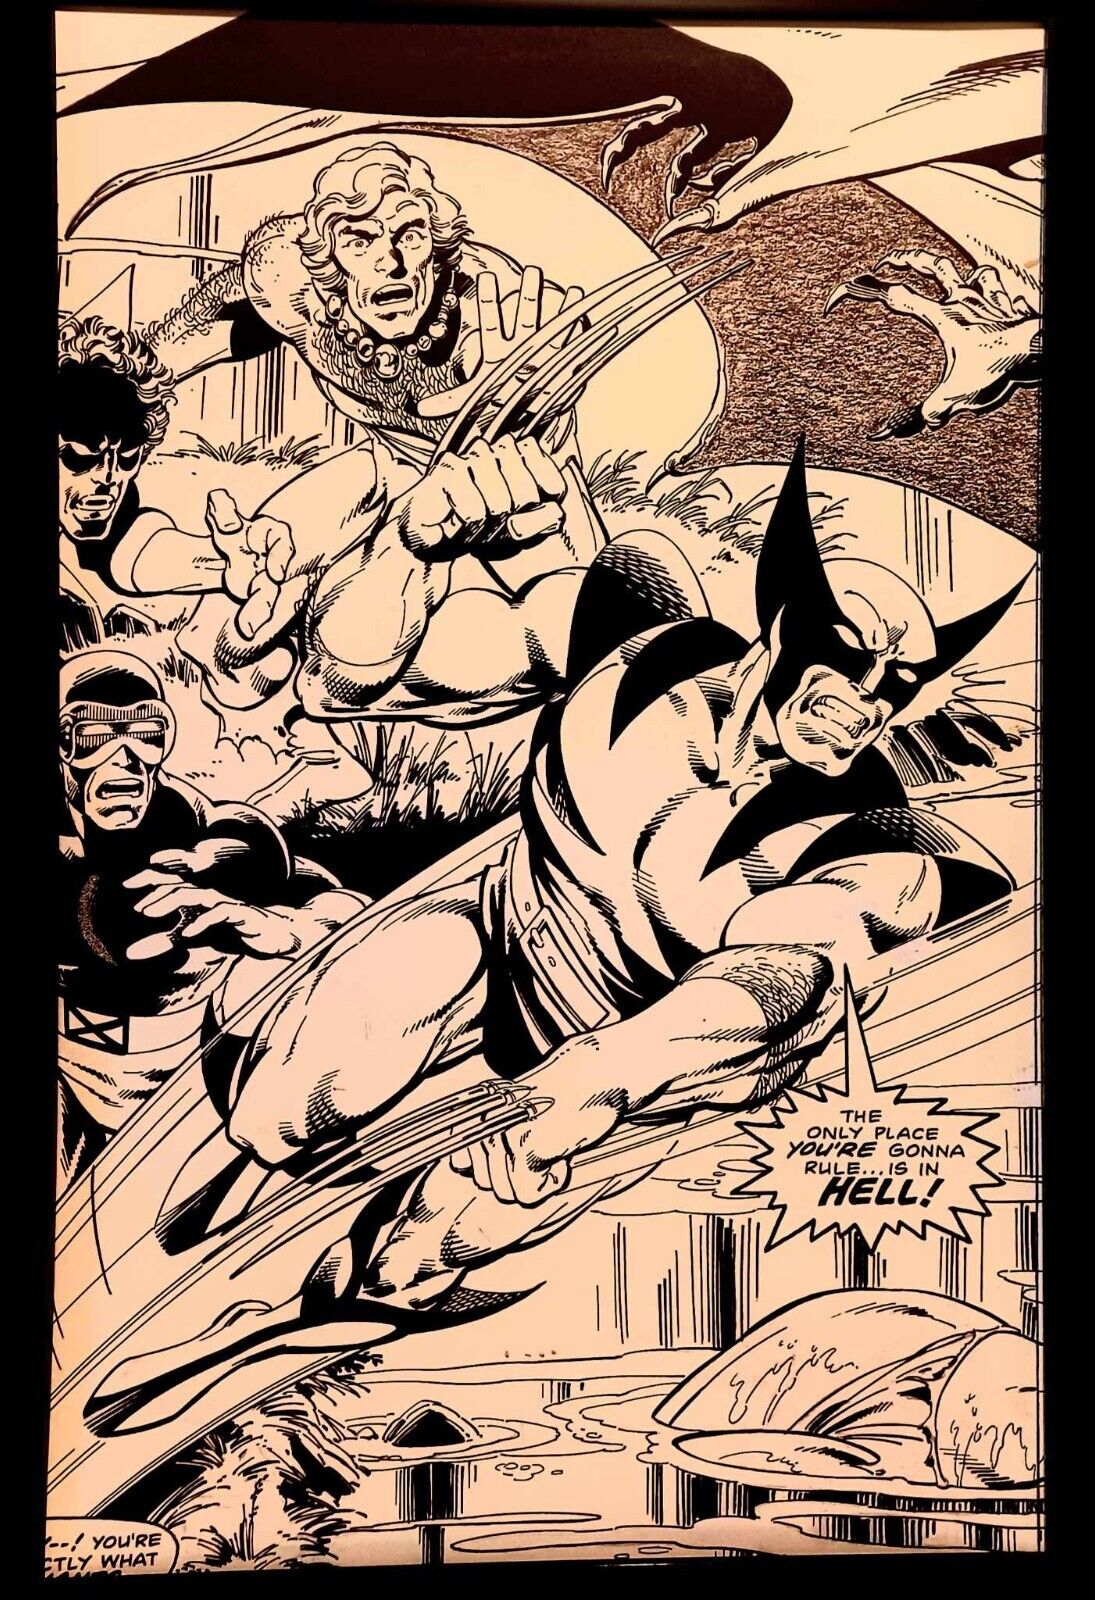 Wolverine and Uncanny X-Men by John Byrne 11x17 FRAMED Original Art Print Poster